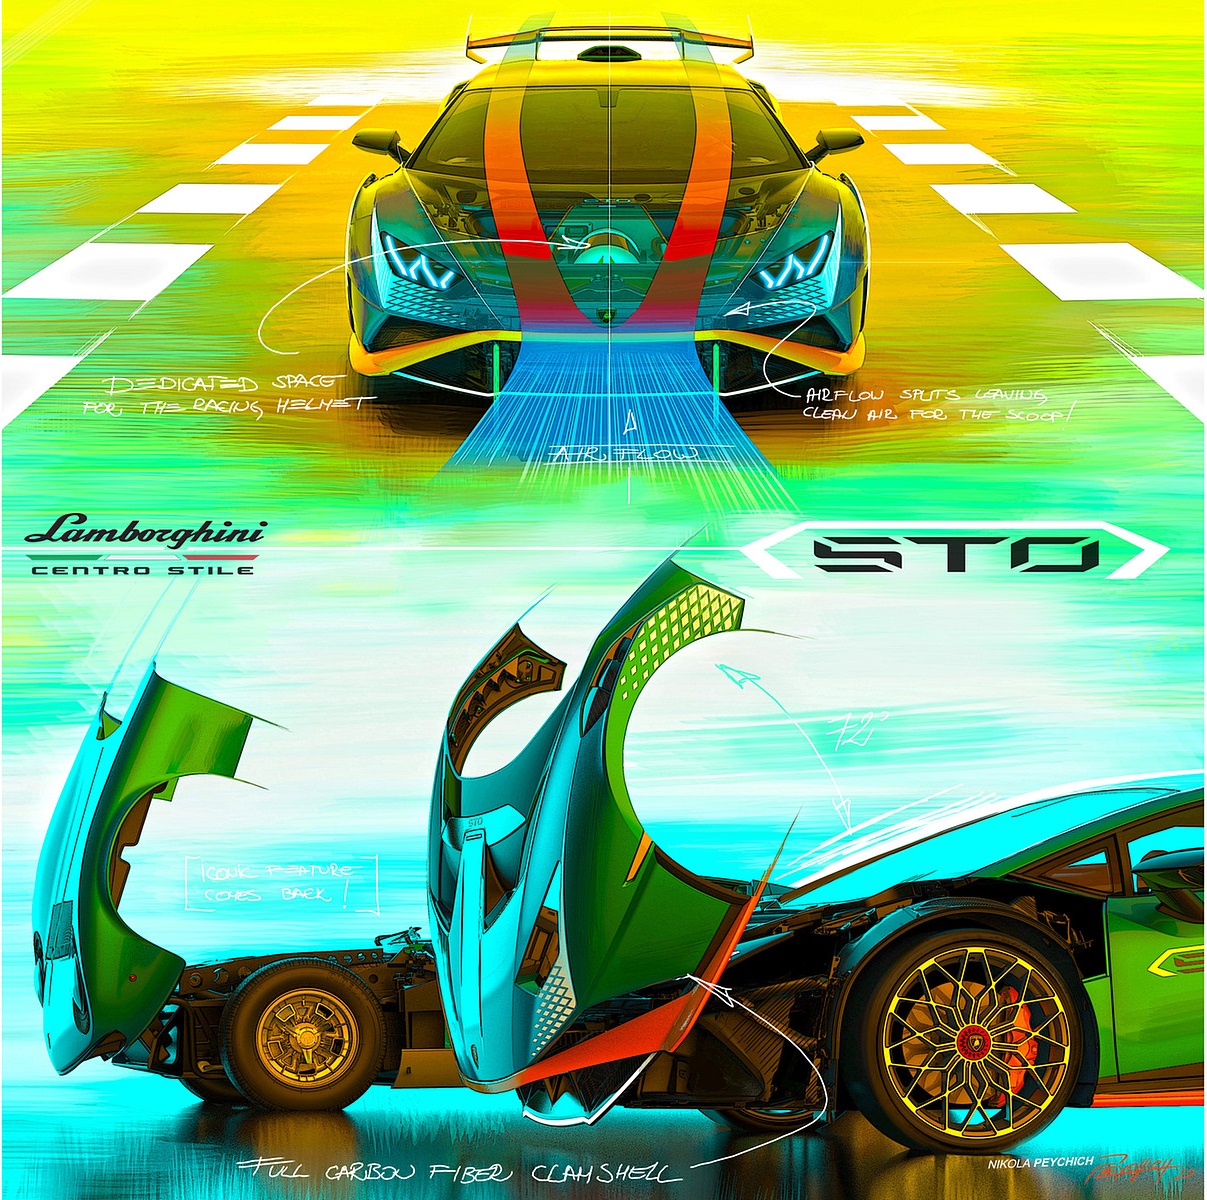 2021 Lamborghini Huracán STO Design Sketch Wallpapers #134 of 135